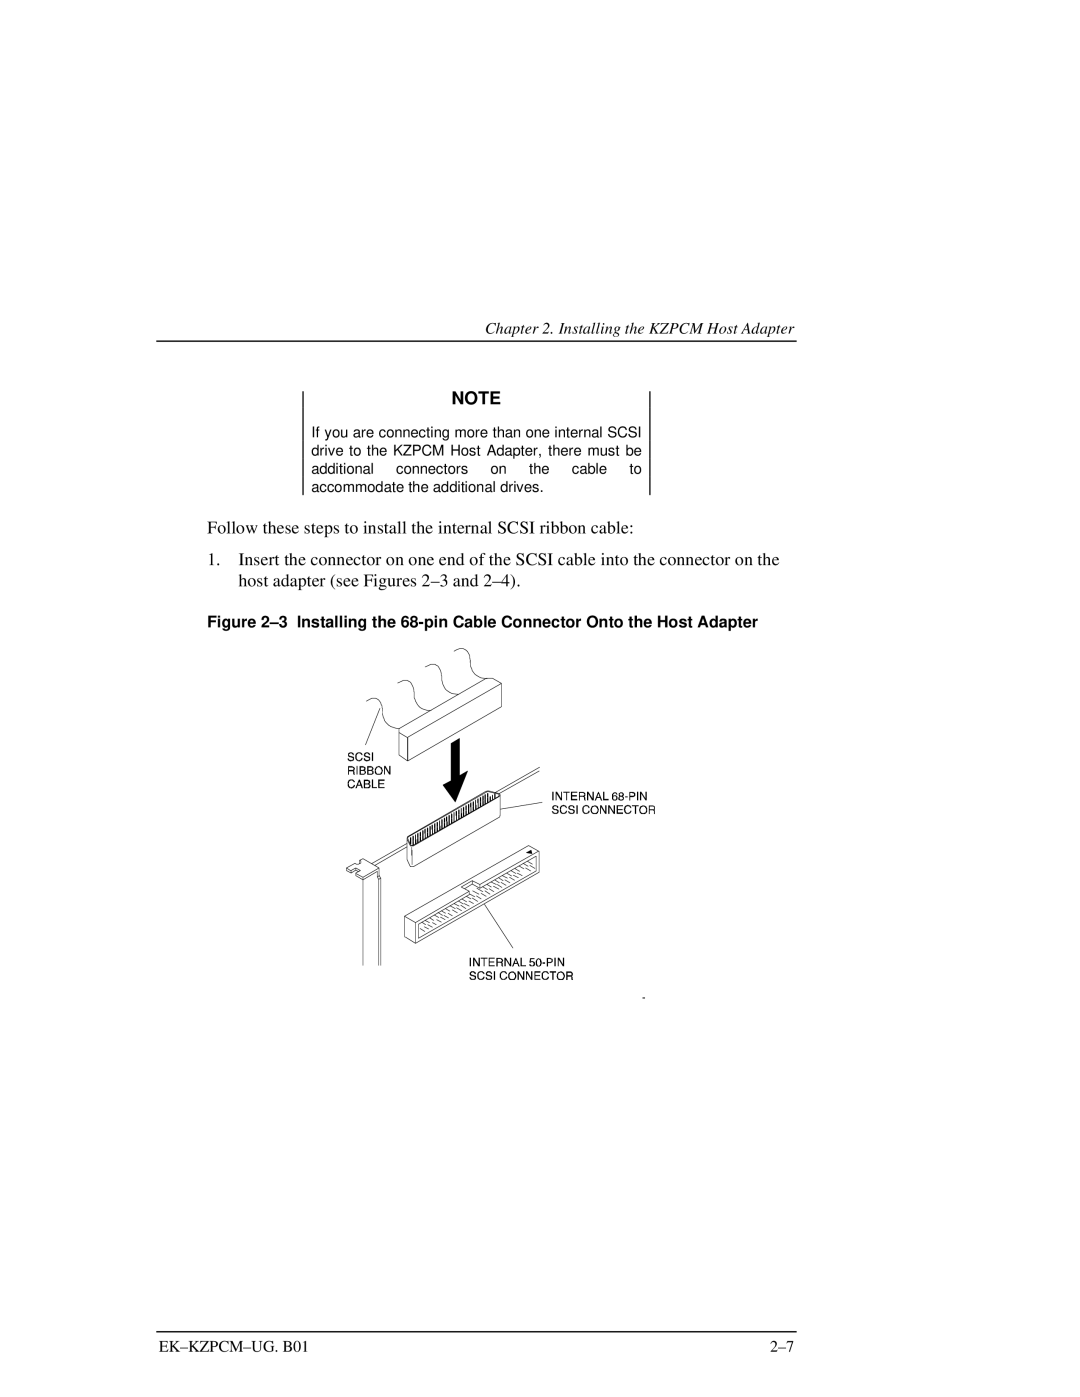 Intel EK-KZPCM-UG manual Follow these steps to install the internal SCSI ribbon cable 